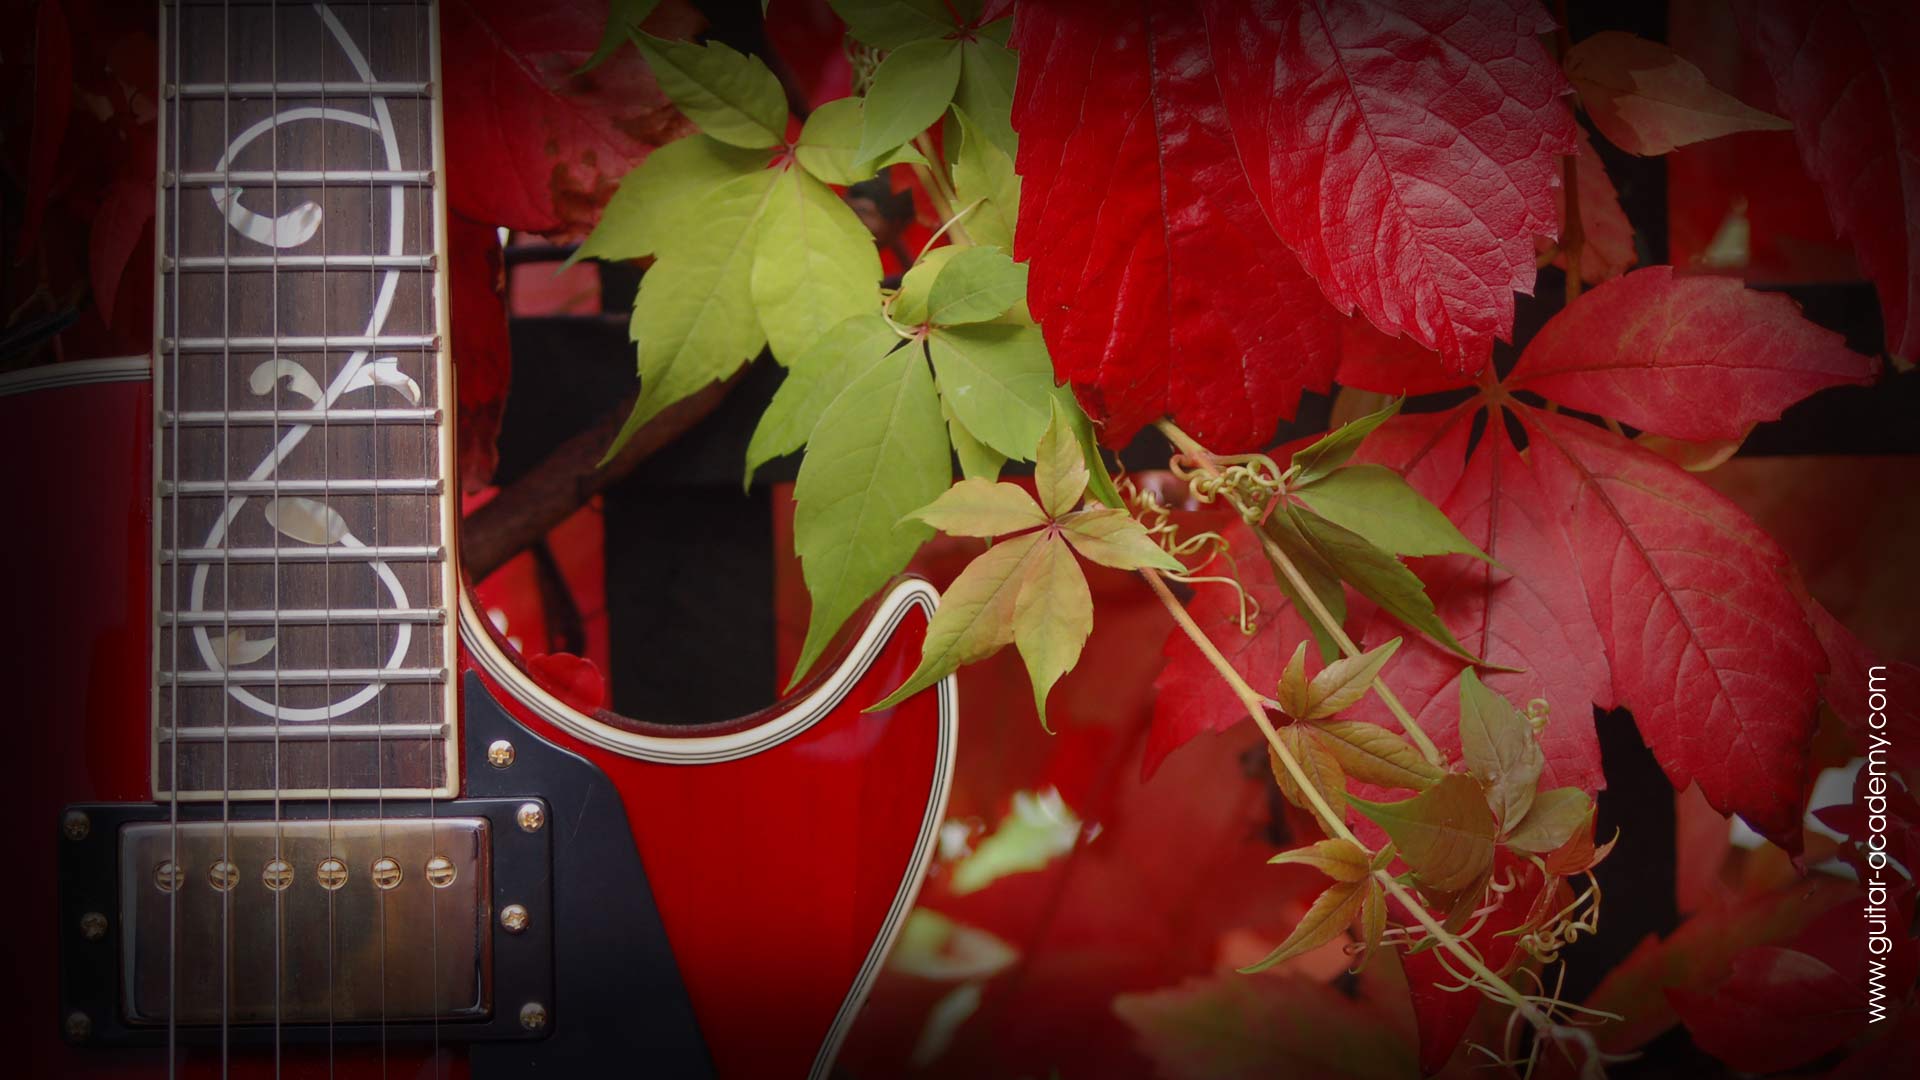 Les Paul electric guitar in autumn leaves